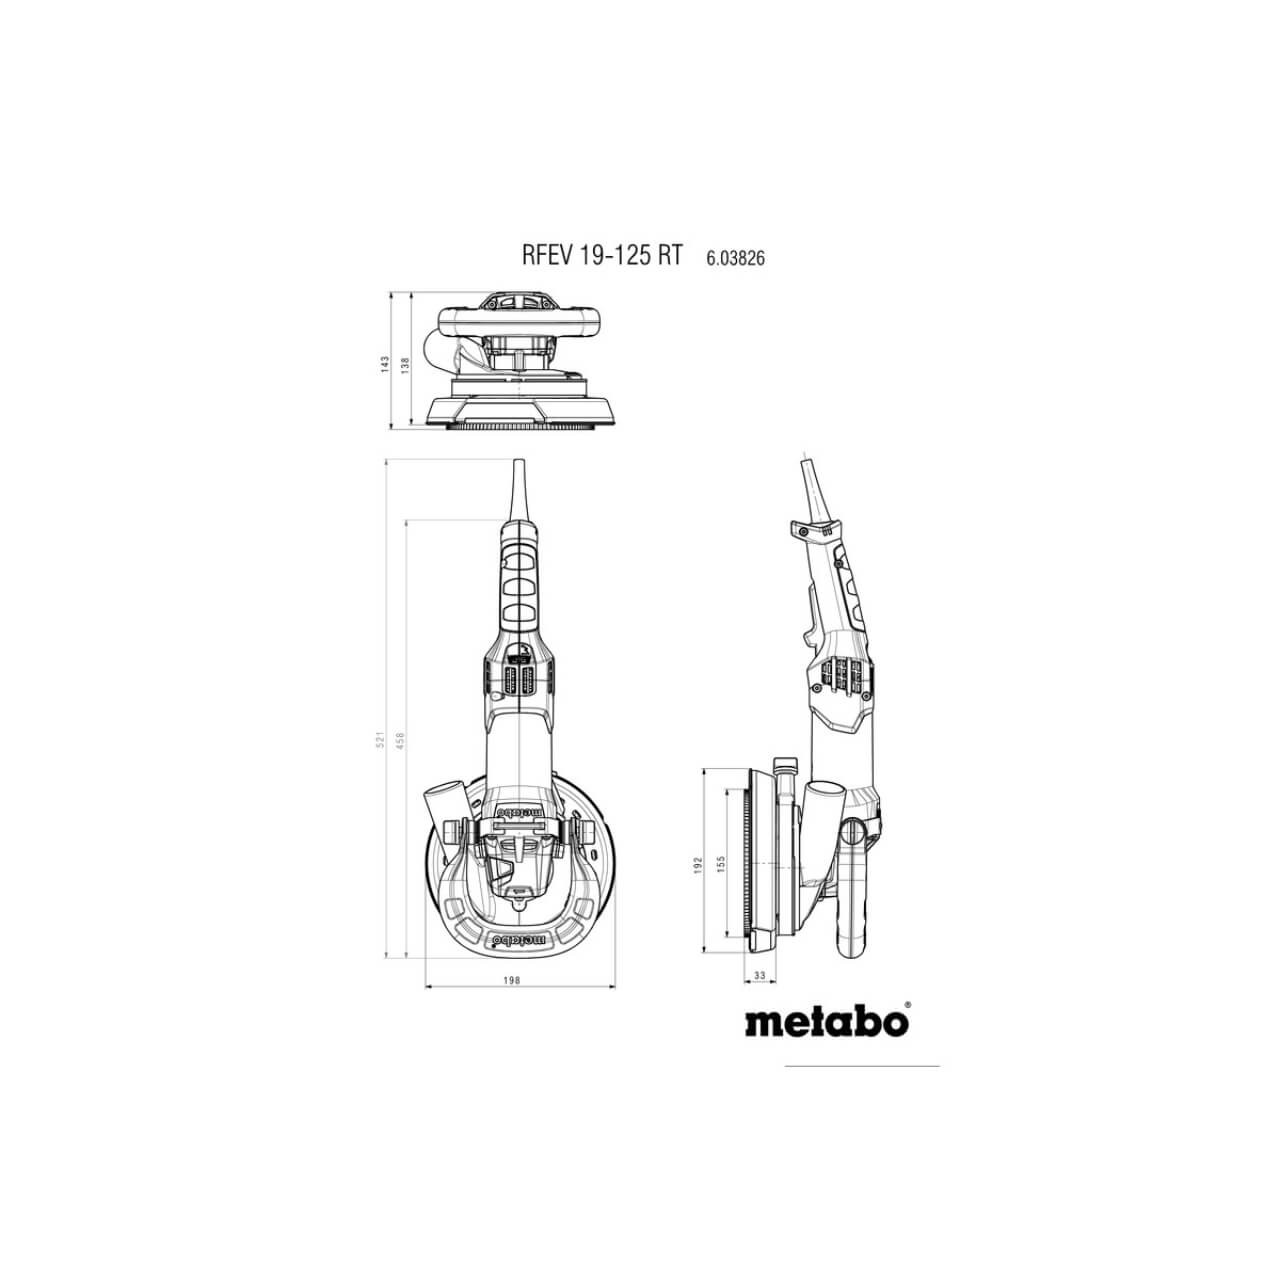 Metabo RFEV 19-125 RT Renovation Milling Machine 125mm 1900W Rat-Tail Constant Torque